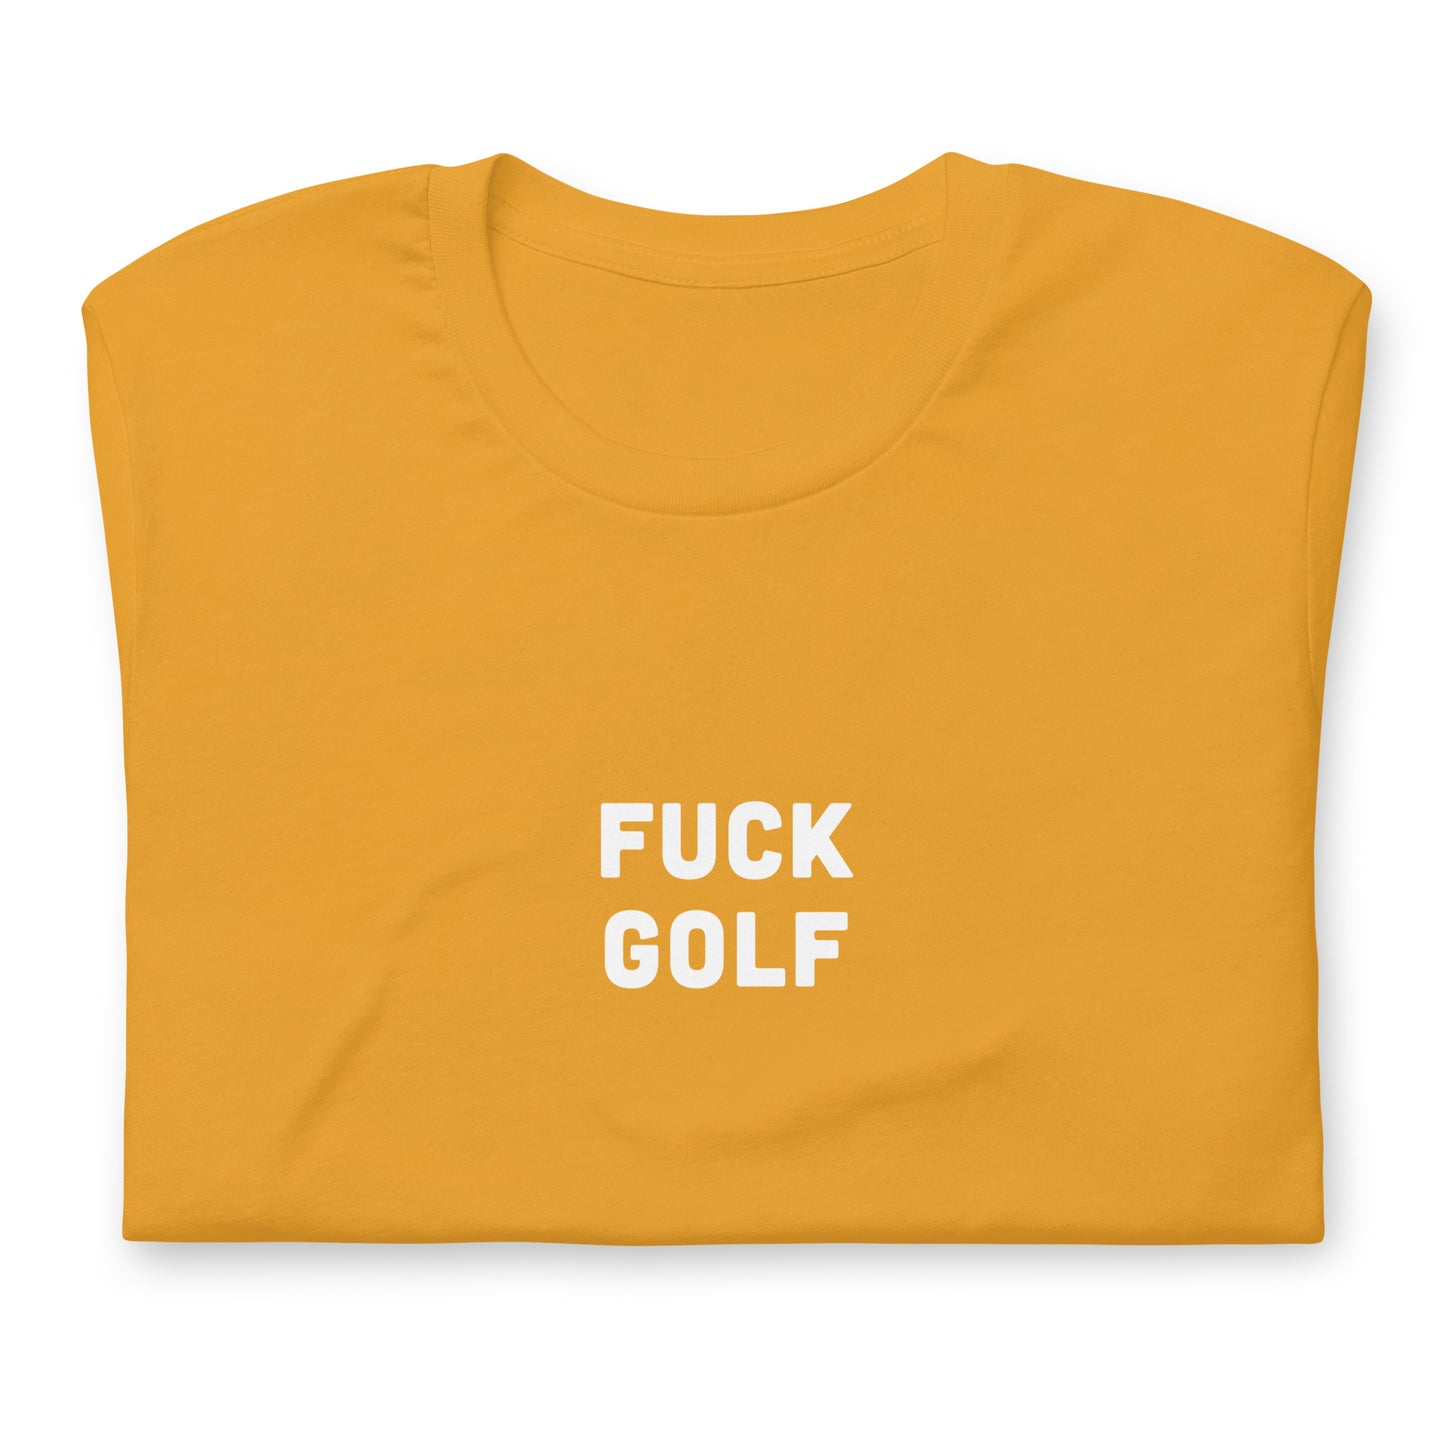 Fuck Golf T-Shirt Size L Color Forest